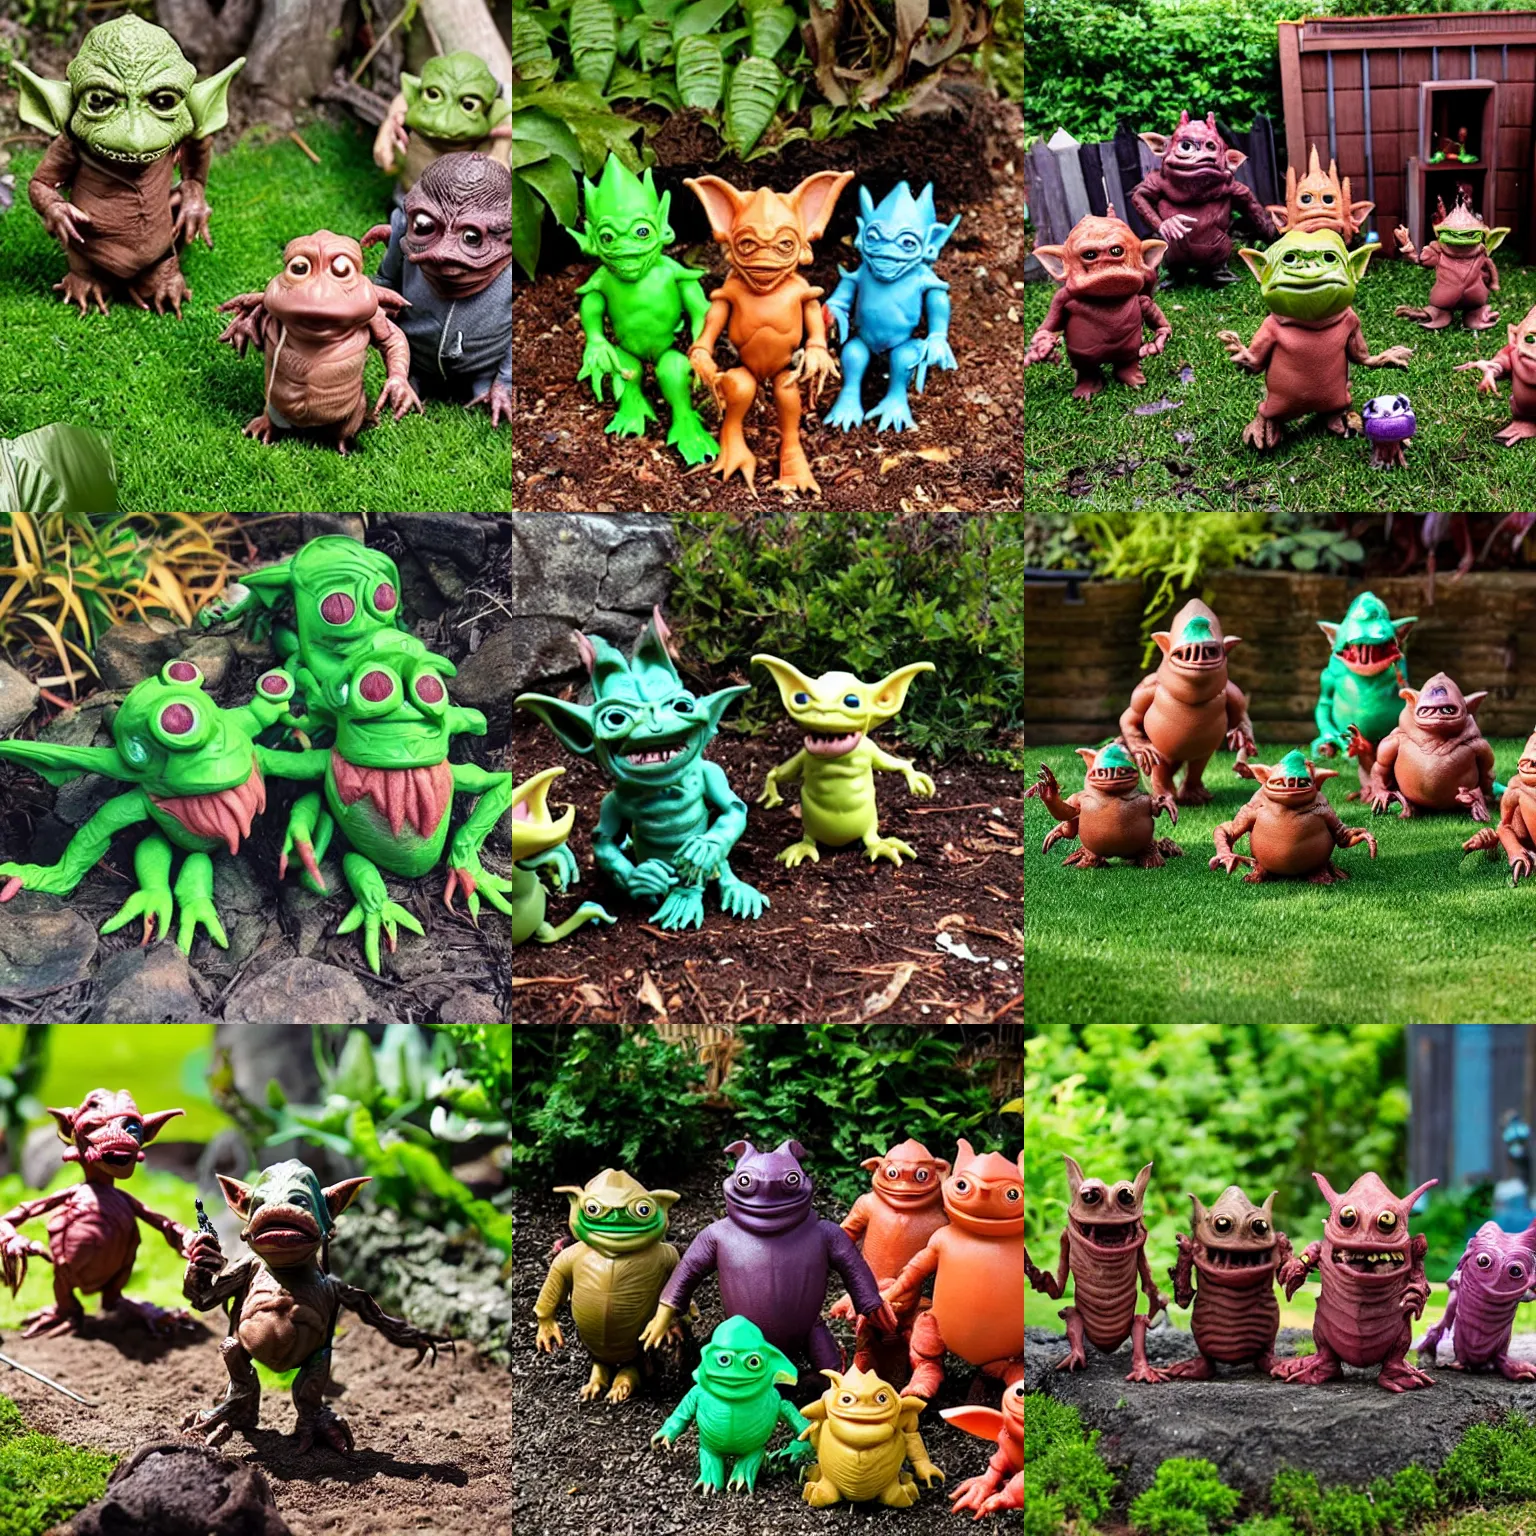 Prompt: disgusting brown Boglins, plastic goblin monster toys in a backyard garden